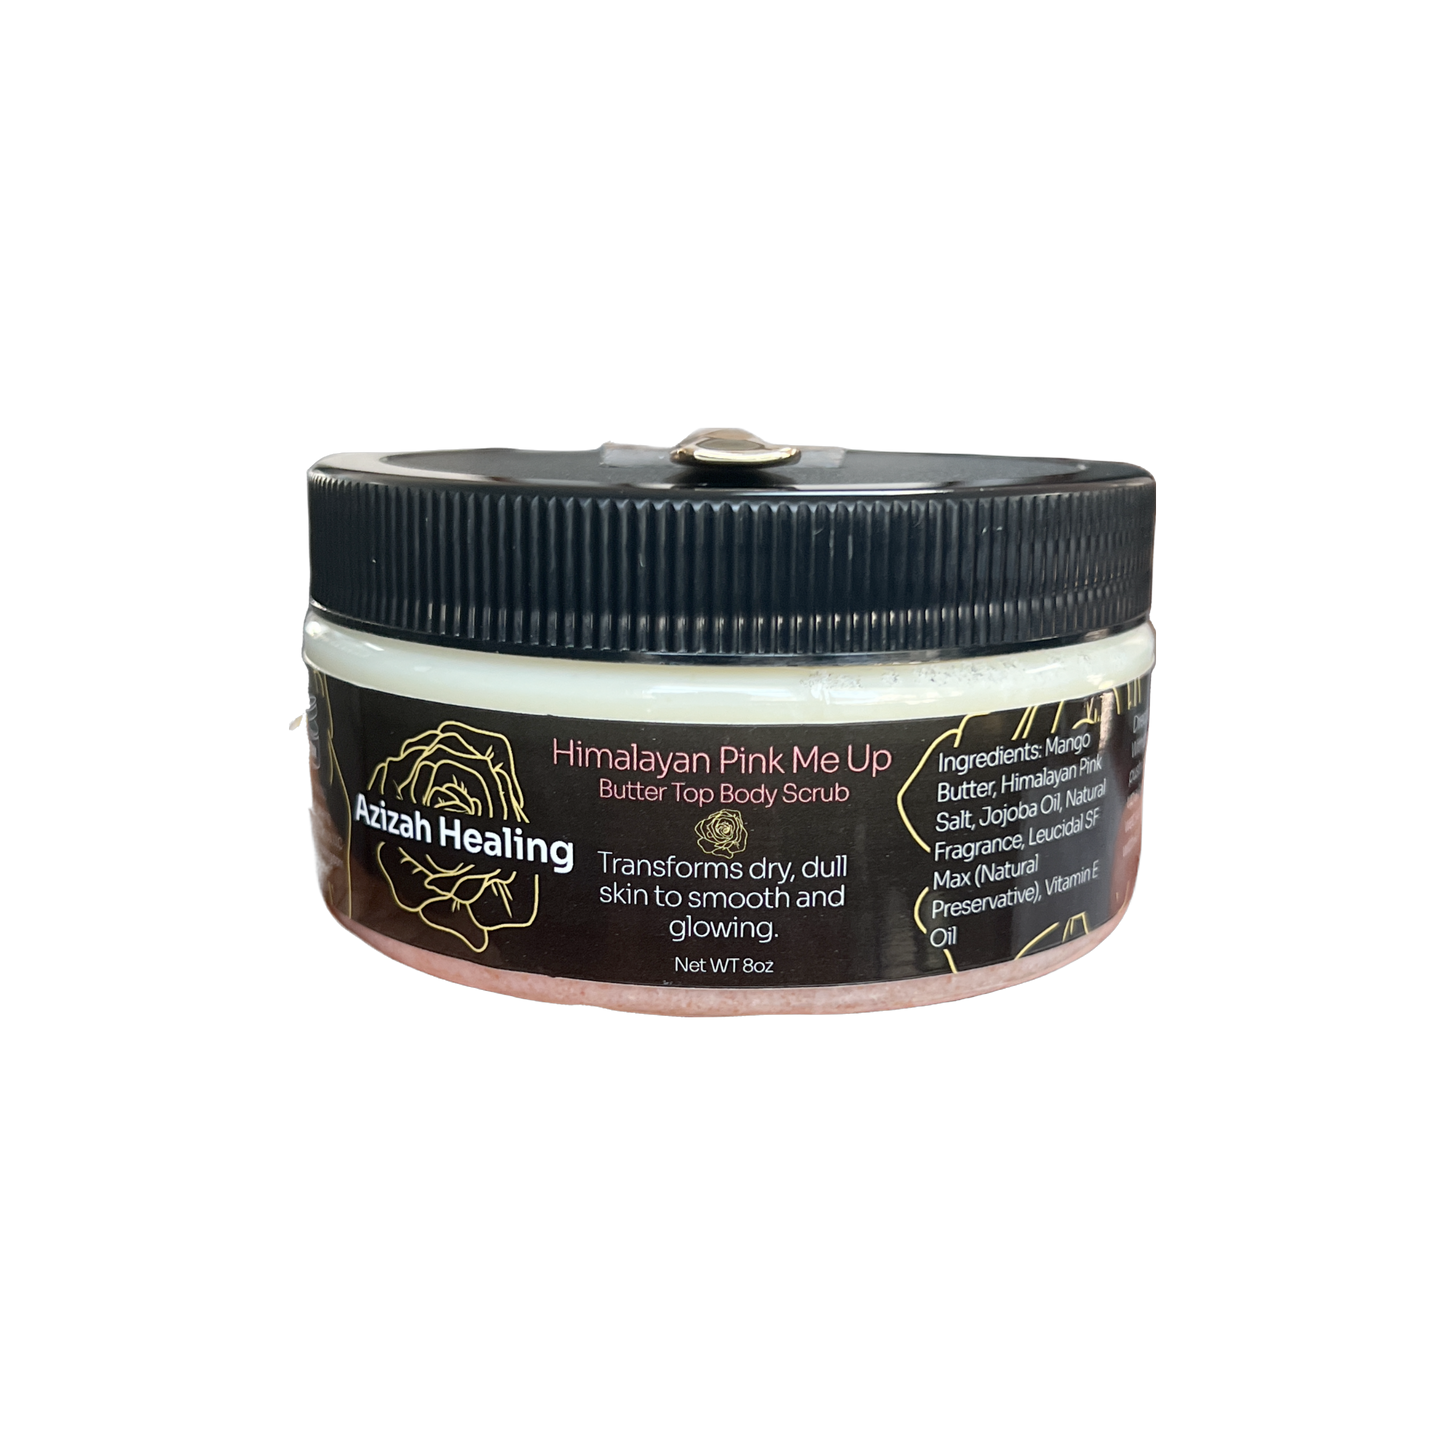 Jar of Azizah Healing's Himalayan Pink Me Up Butter Top Body Scrub, showcasing its luxurious texture and captivating mango aroma